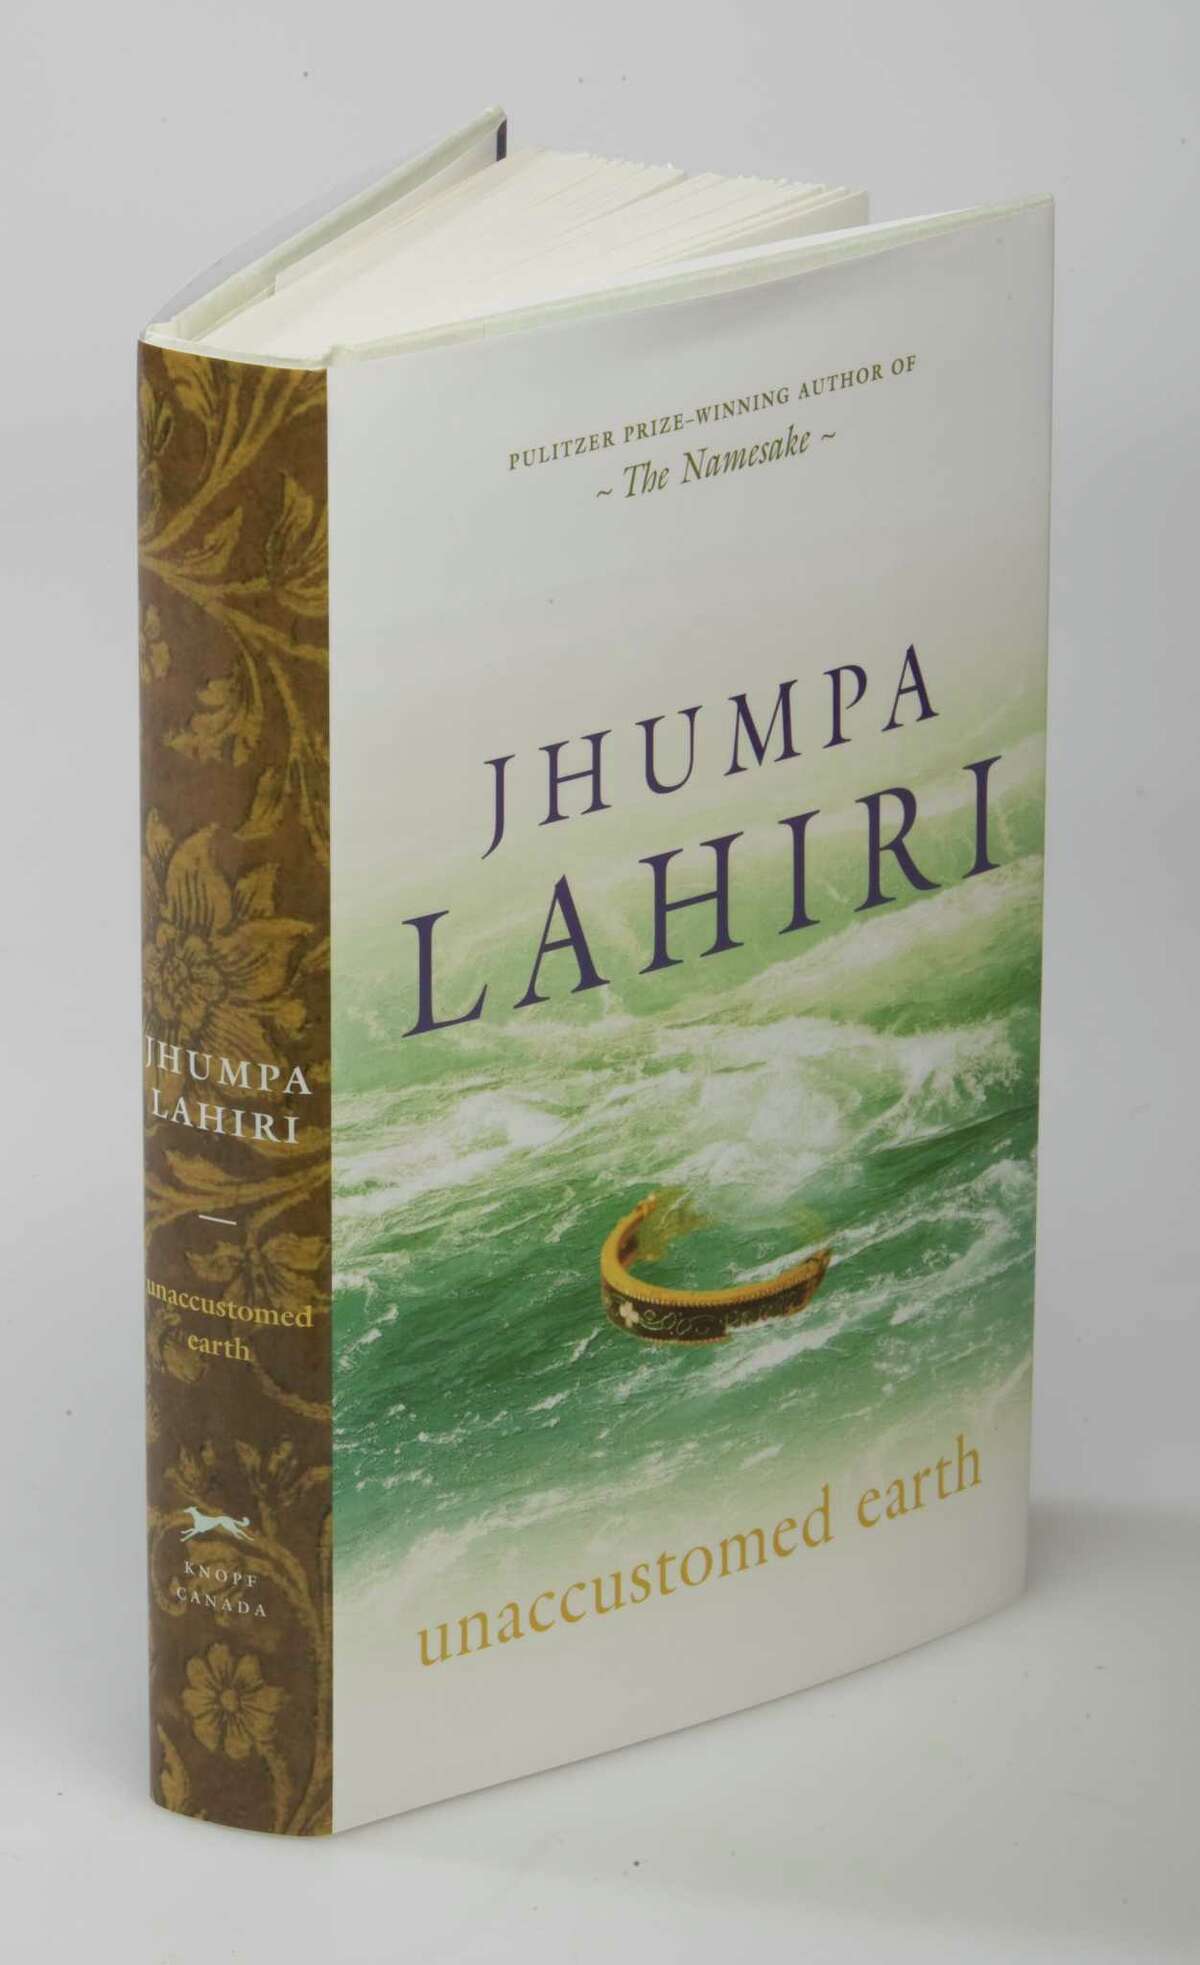 "Unaccustomed Earth by Jhumpa Lahiri" (Photo by David Cooper/Toronto Star via Getty Images)